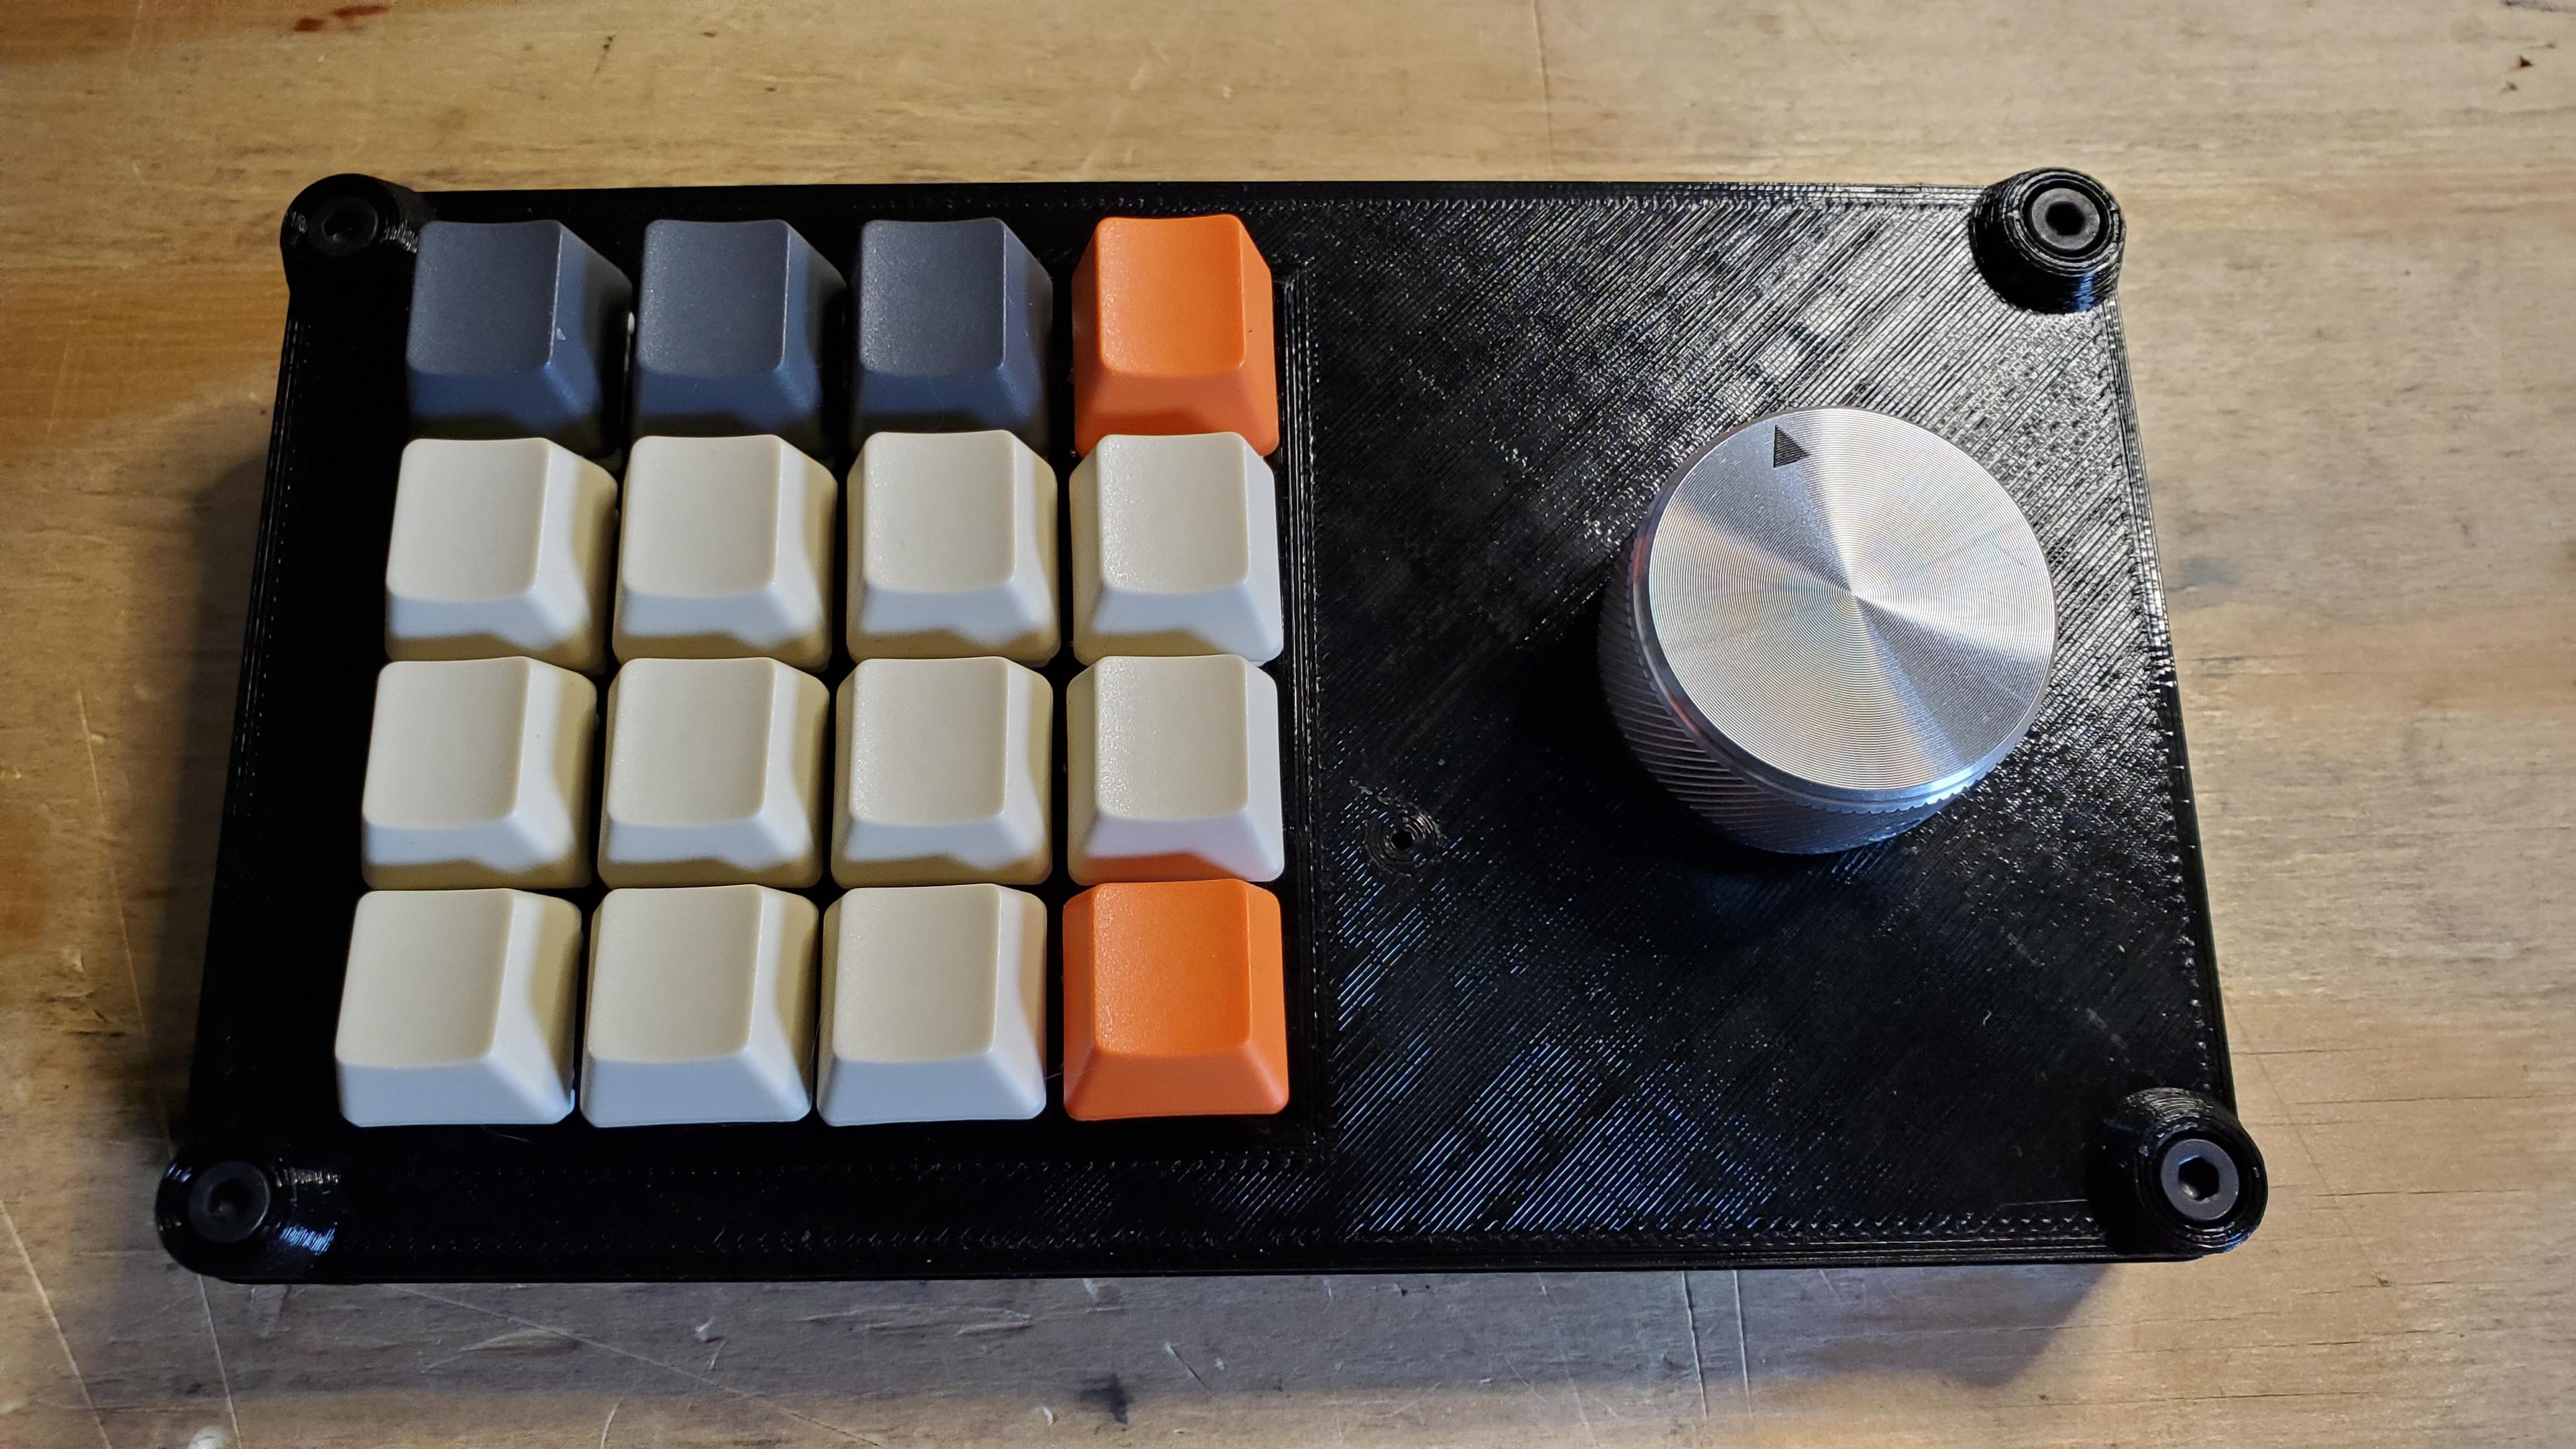 Dumbpad - 4x4 Macro Keypad with Rotary Encoder 3d model